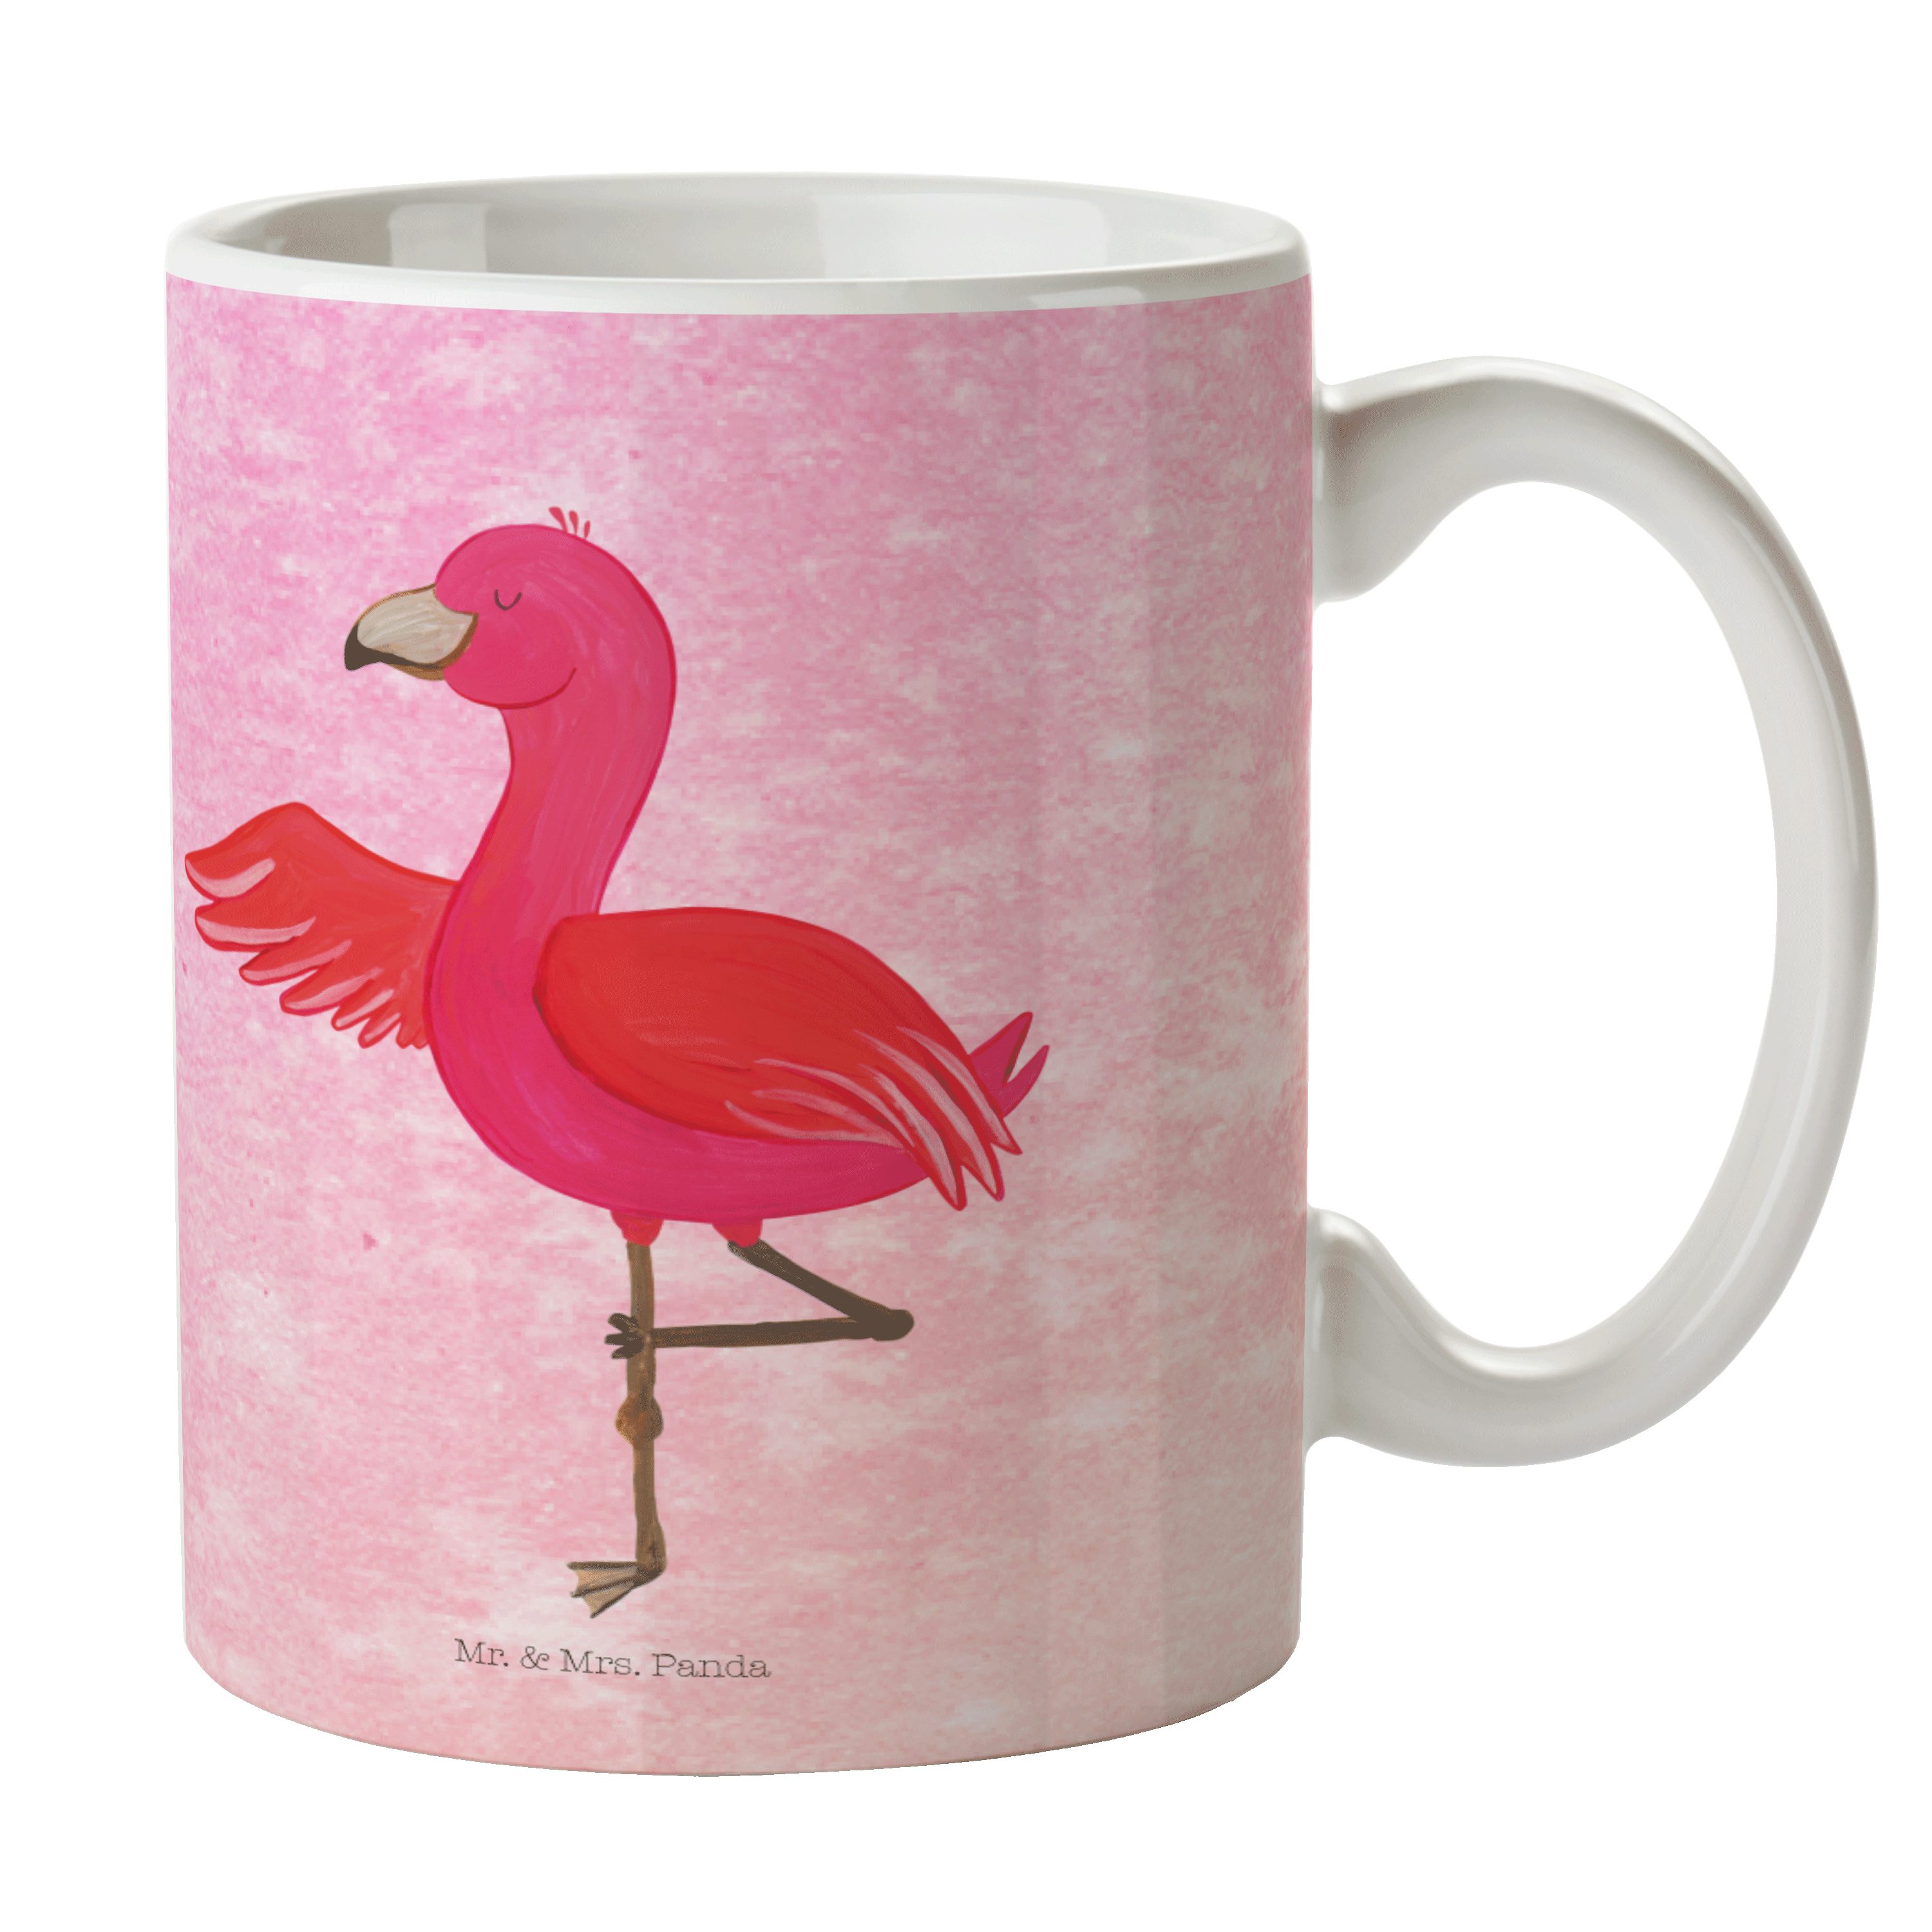 Mr. & Mrs. Panda Tasse Flamingo Yoga - Aquarell Pink - Geschenk, Tasse Motive, Tasse, Yoga-Ü, Keramik